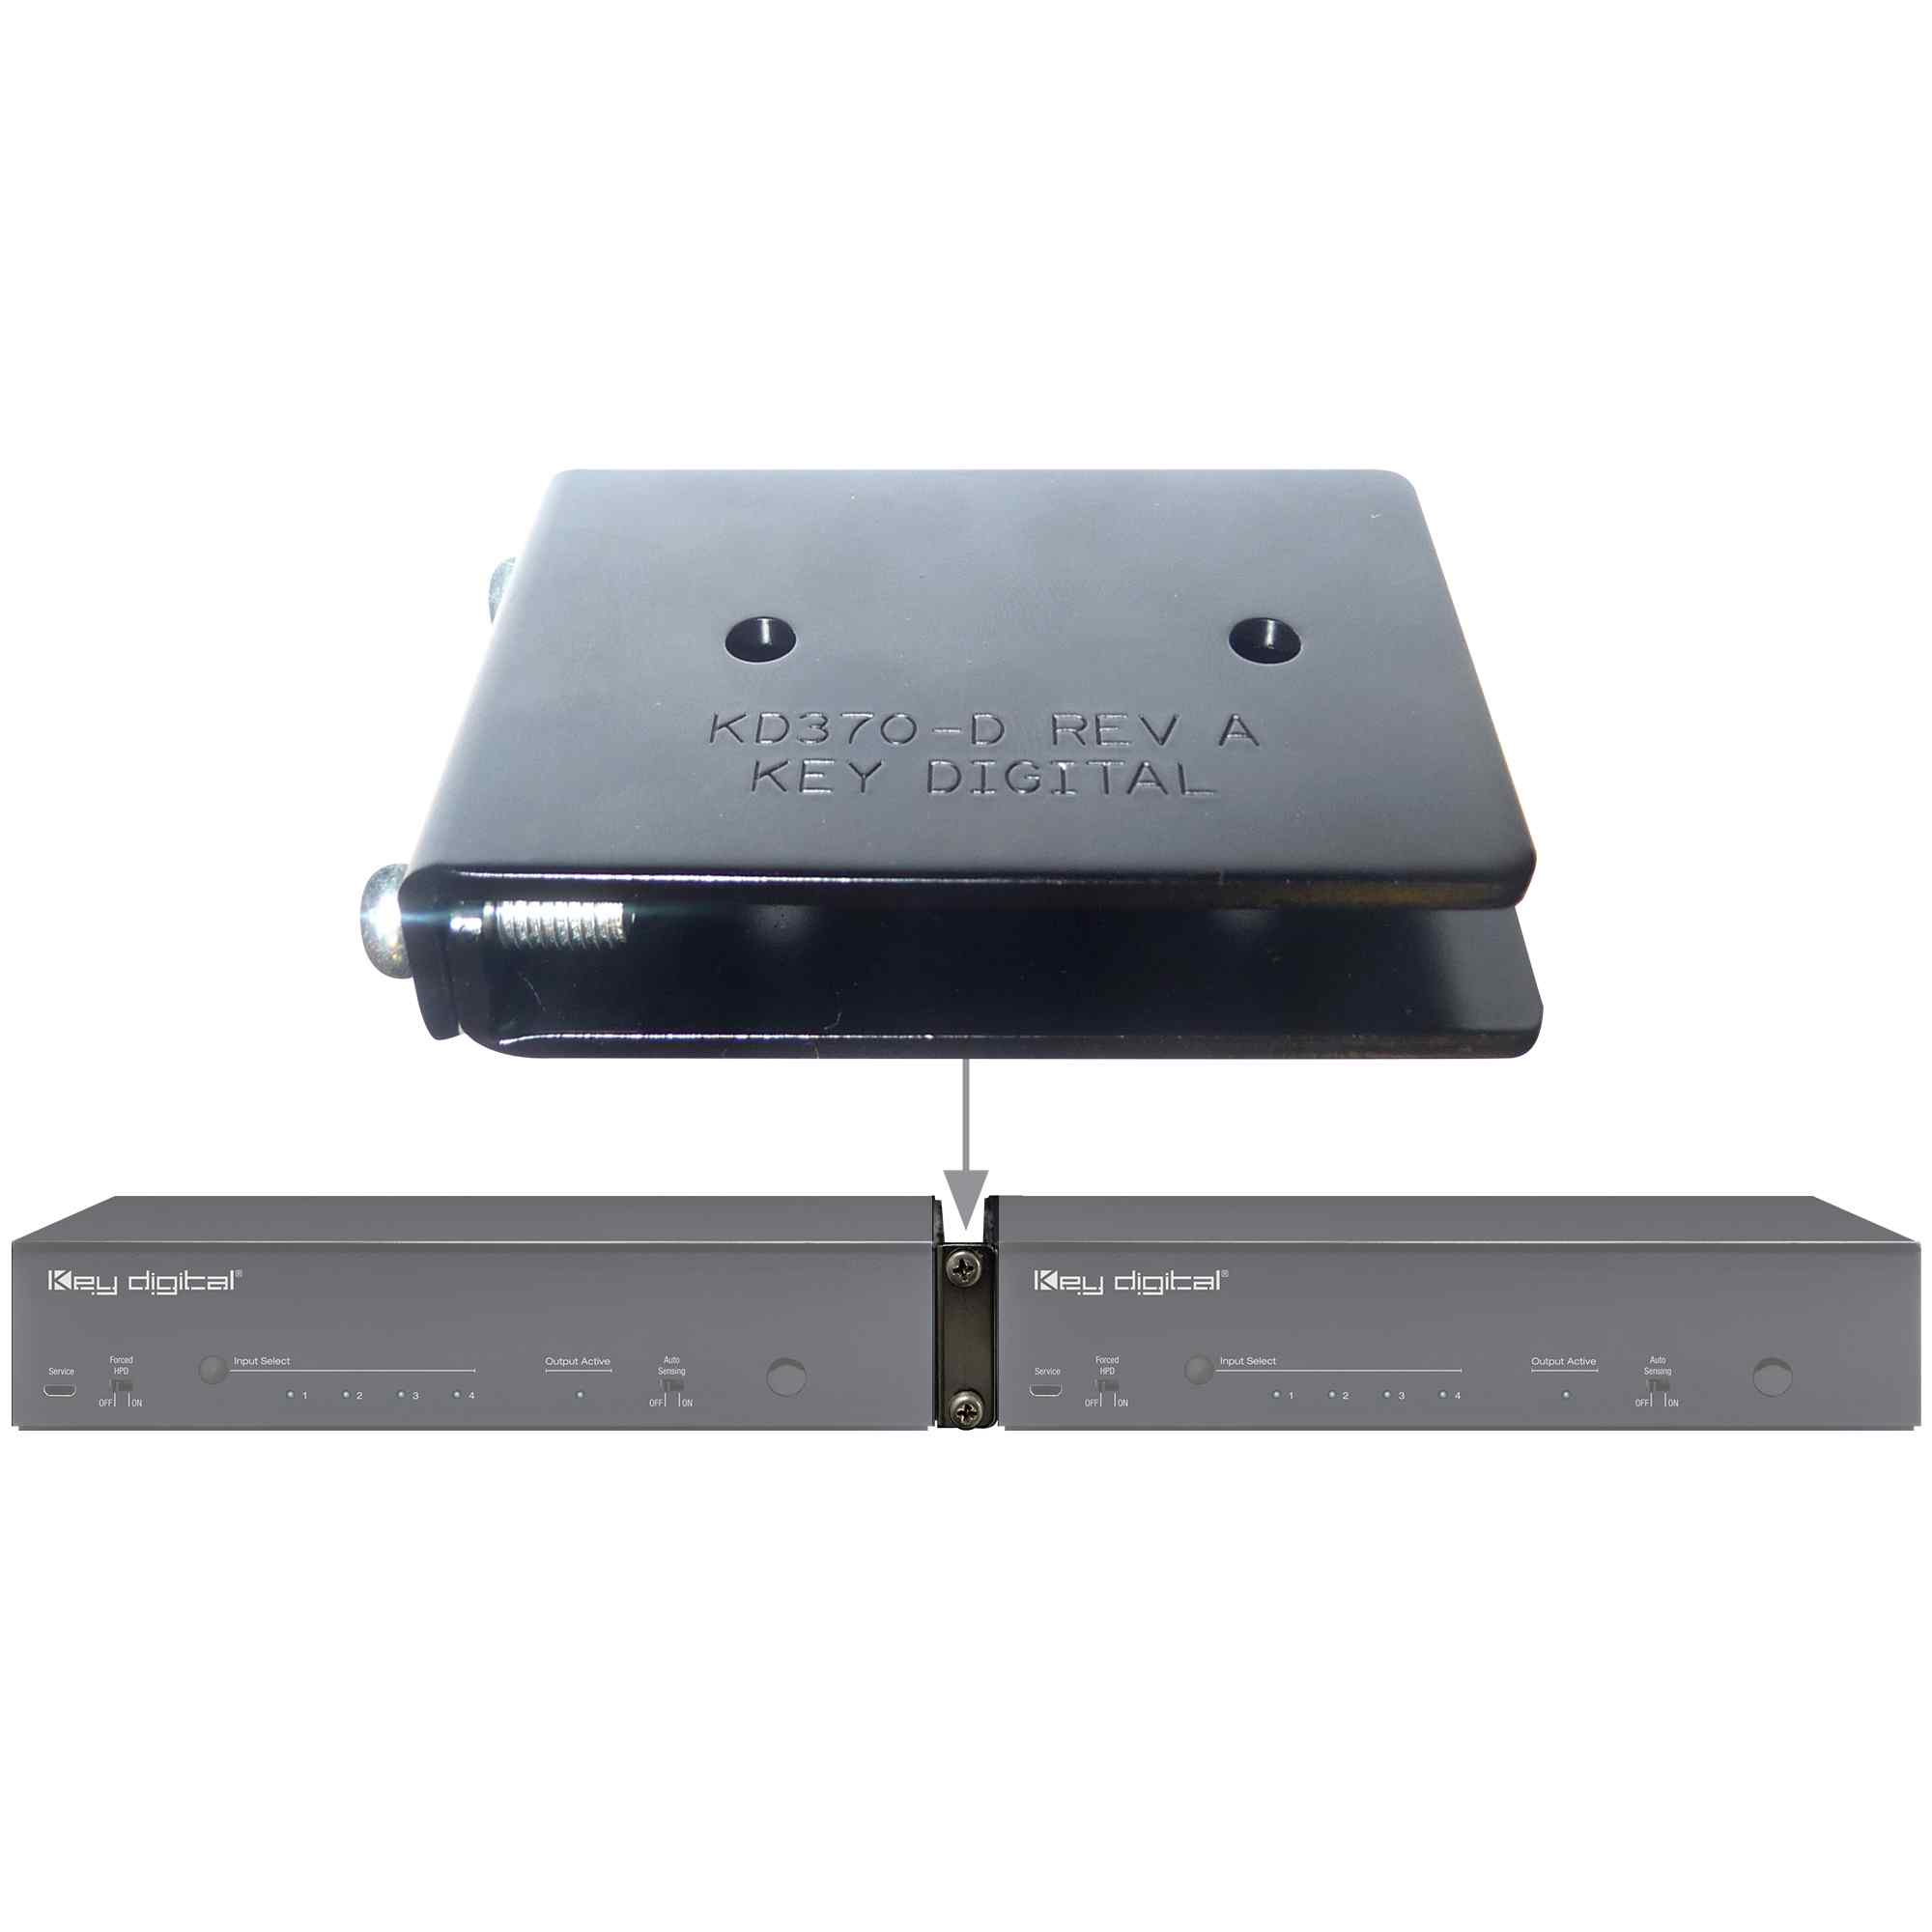 Thumbnail of Key Digital mounting adapter product image